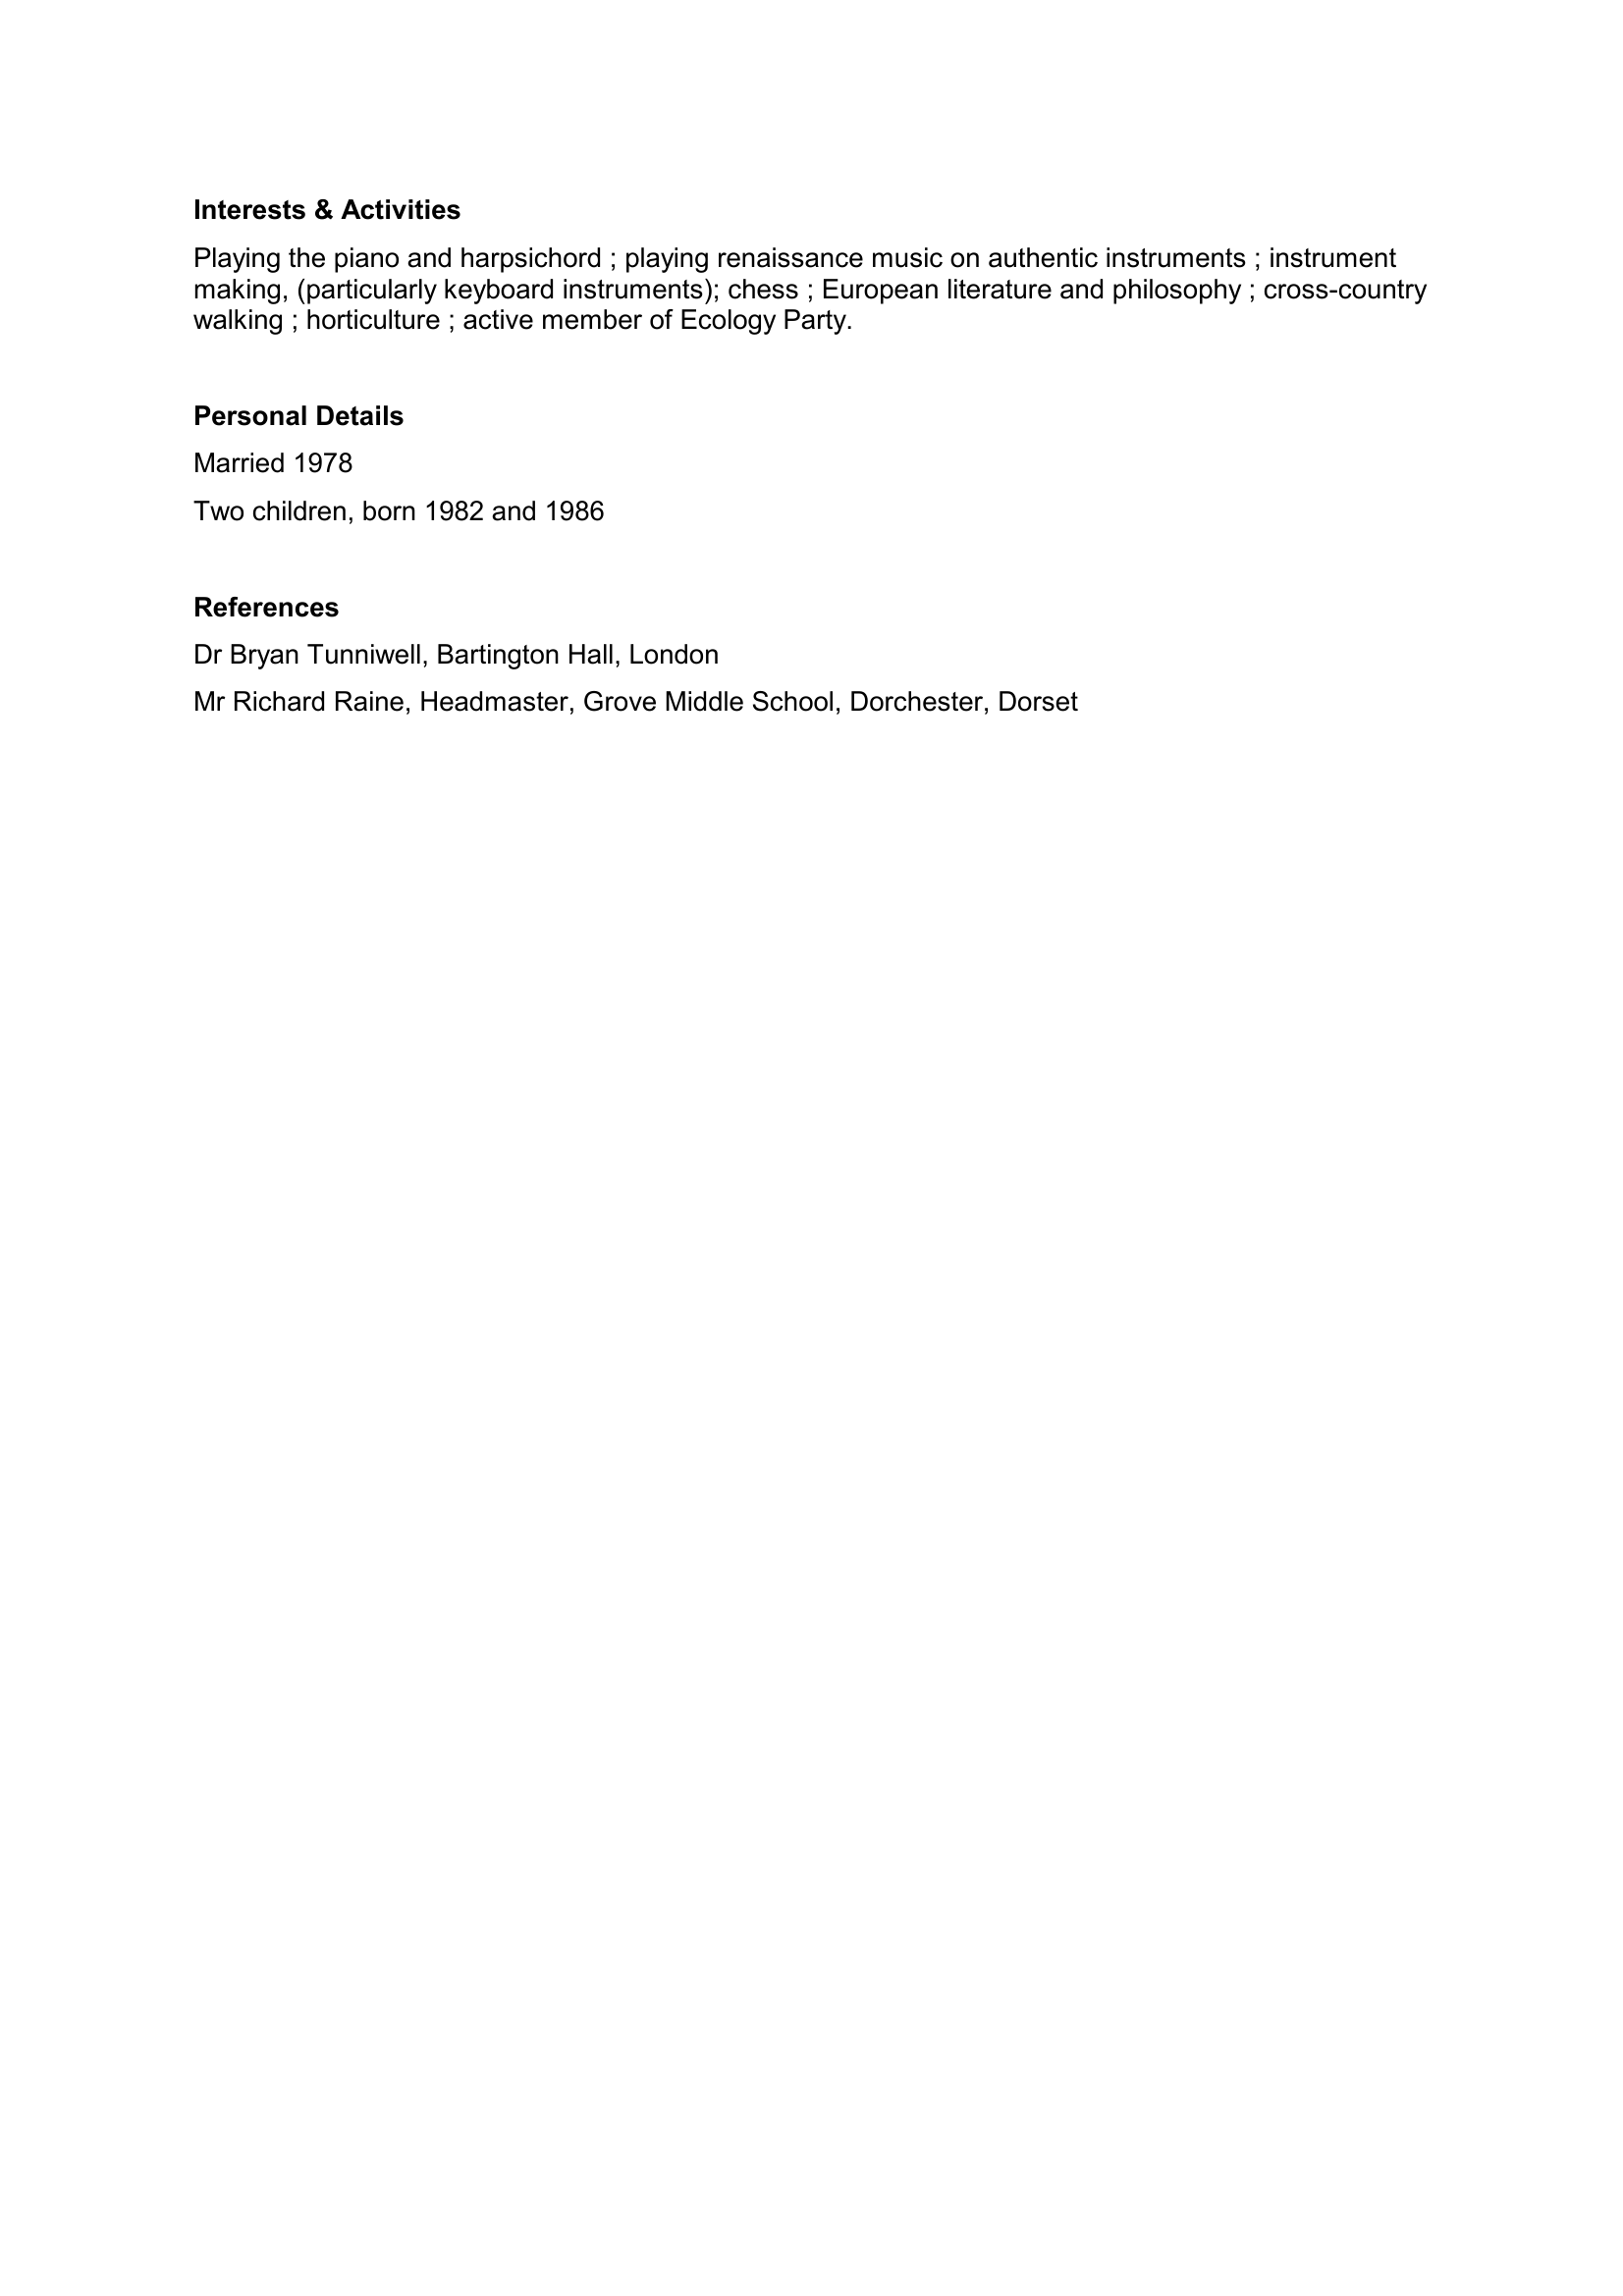 Prévisualisation du document CURRICULUM VITAE
Name

: Andrew Foster

Address

: 105 Cheriton Road, Dorchester, Dorest DY4